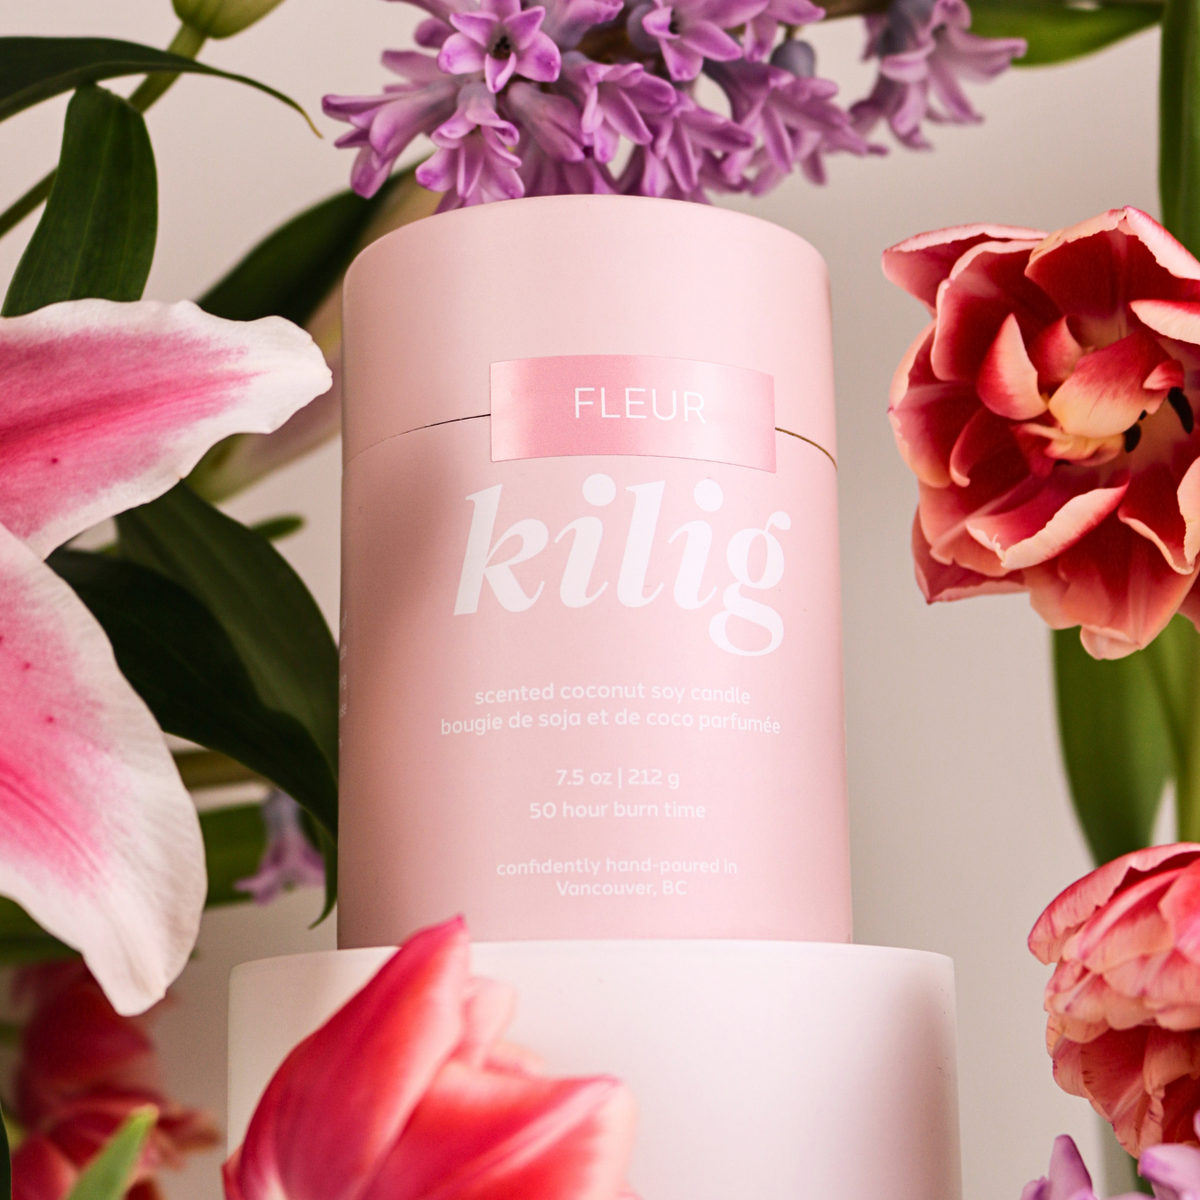 Kilig Candle - Fleur DB Studio